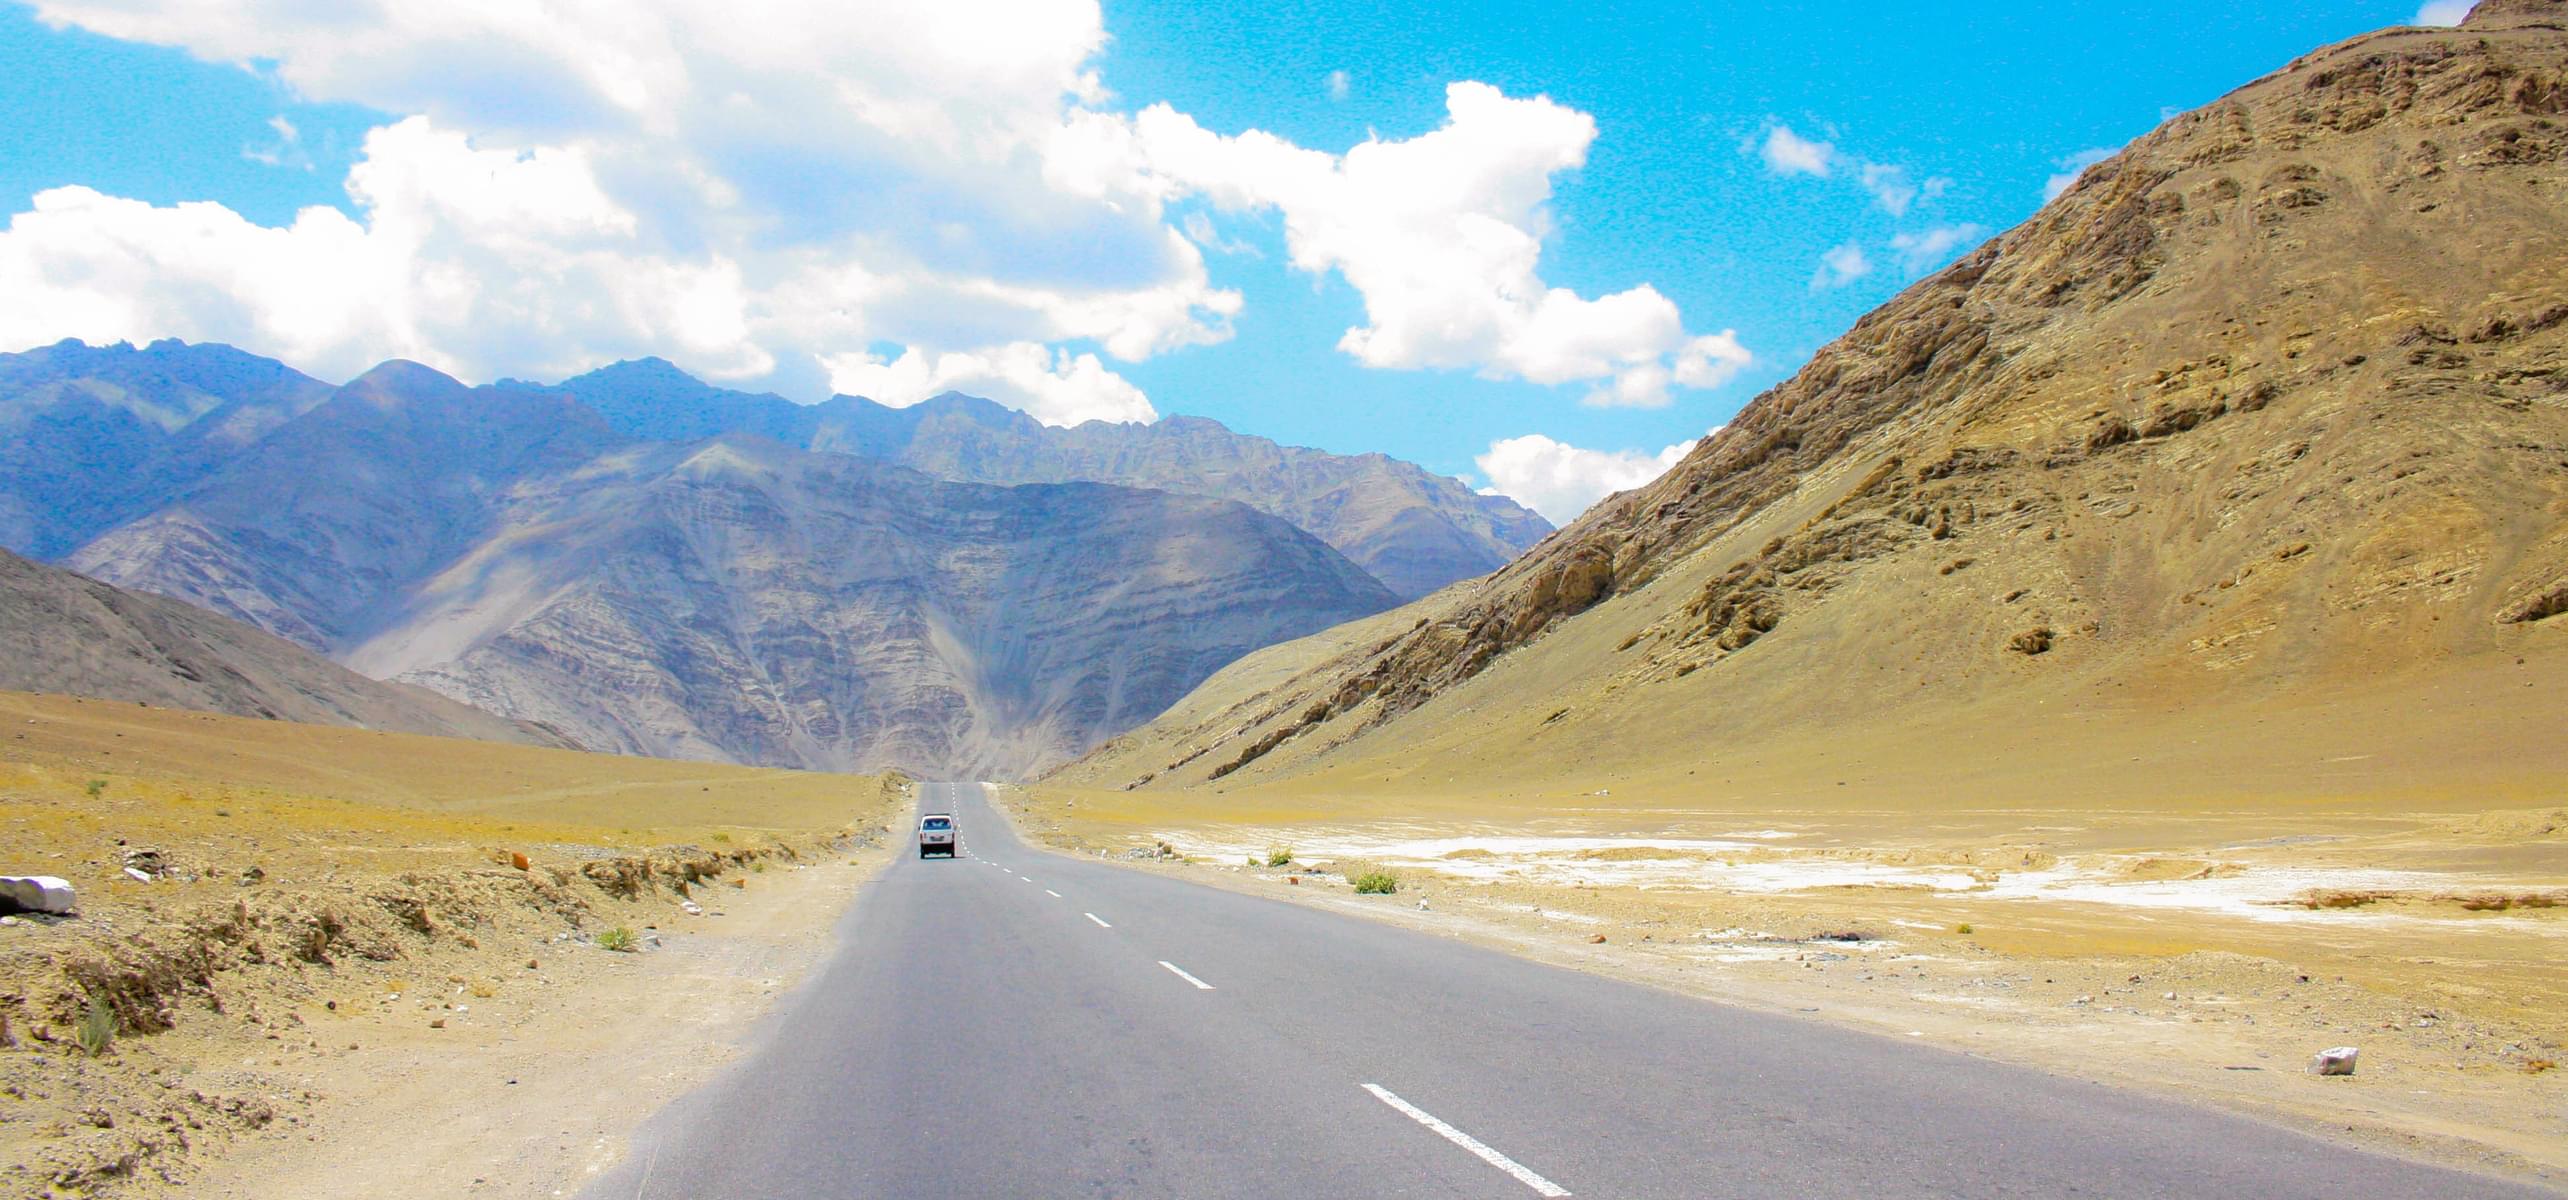  Take a bike trip across the rugged terrain of Leh Ladakh and make memories along the way